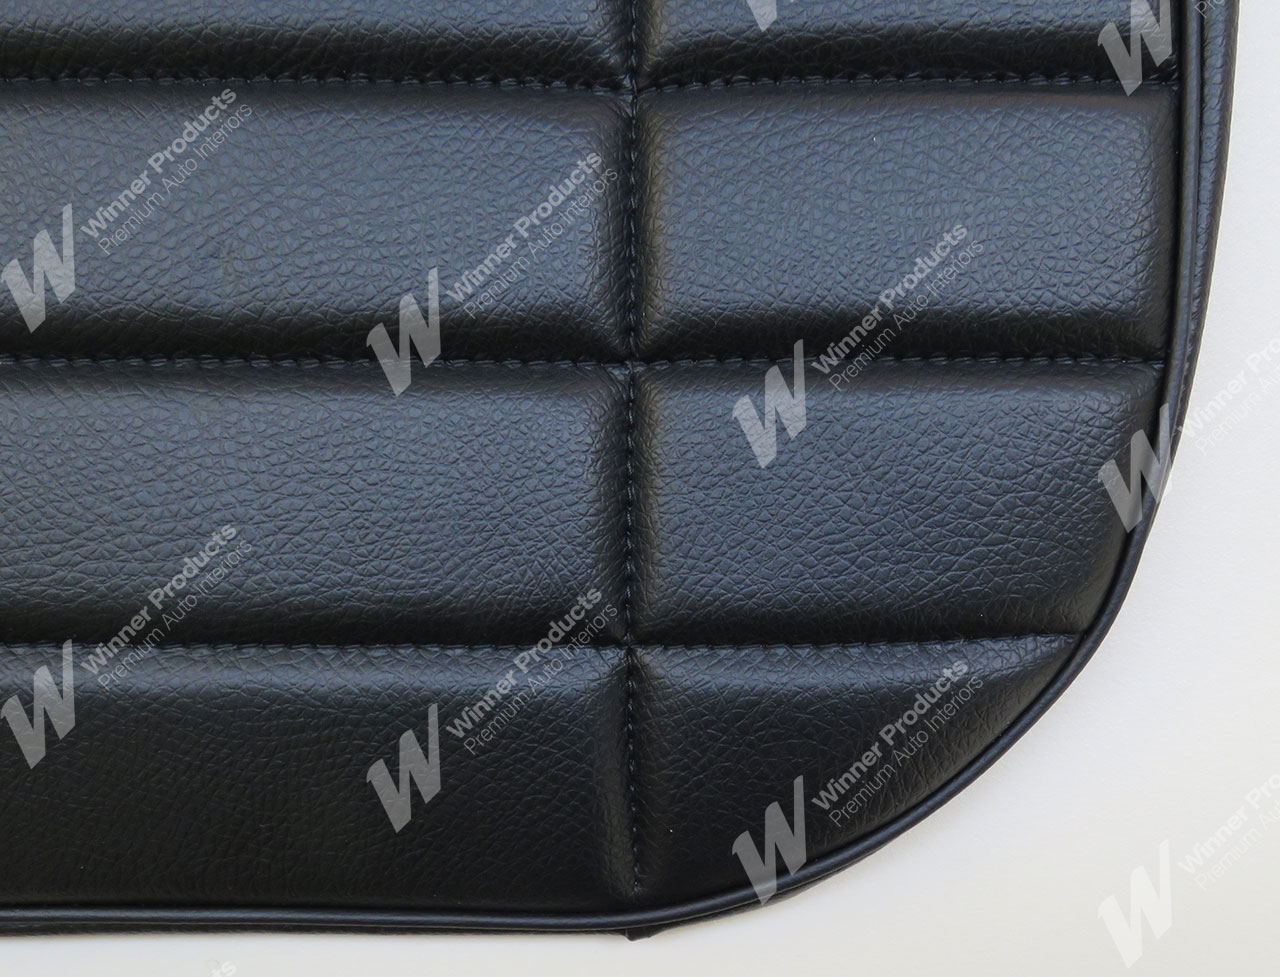 Holden Torana LC Torana XU1 Coupe 40V Black Seat Covers (Image 6 of 6)